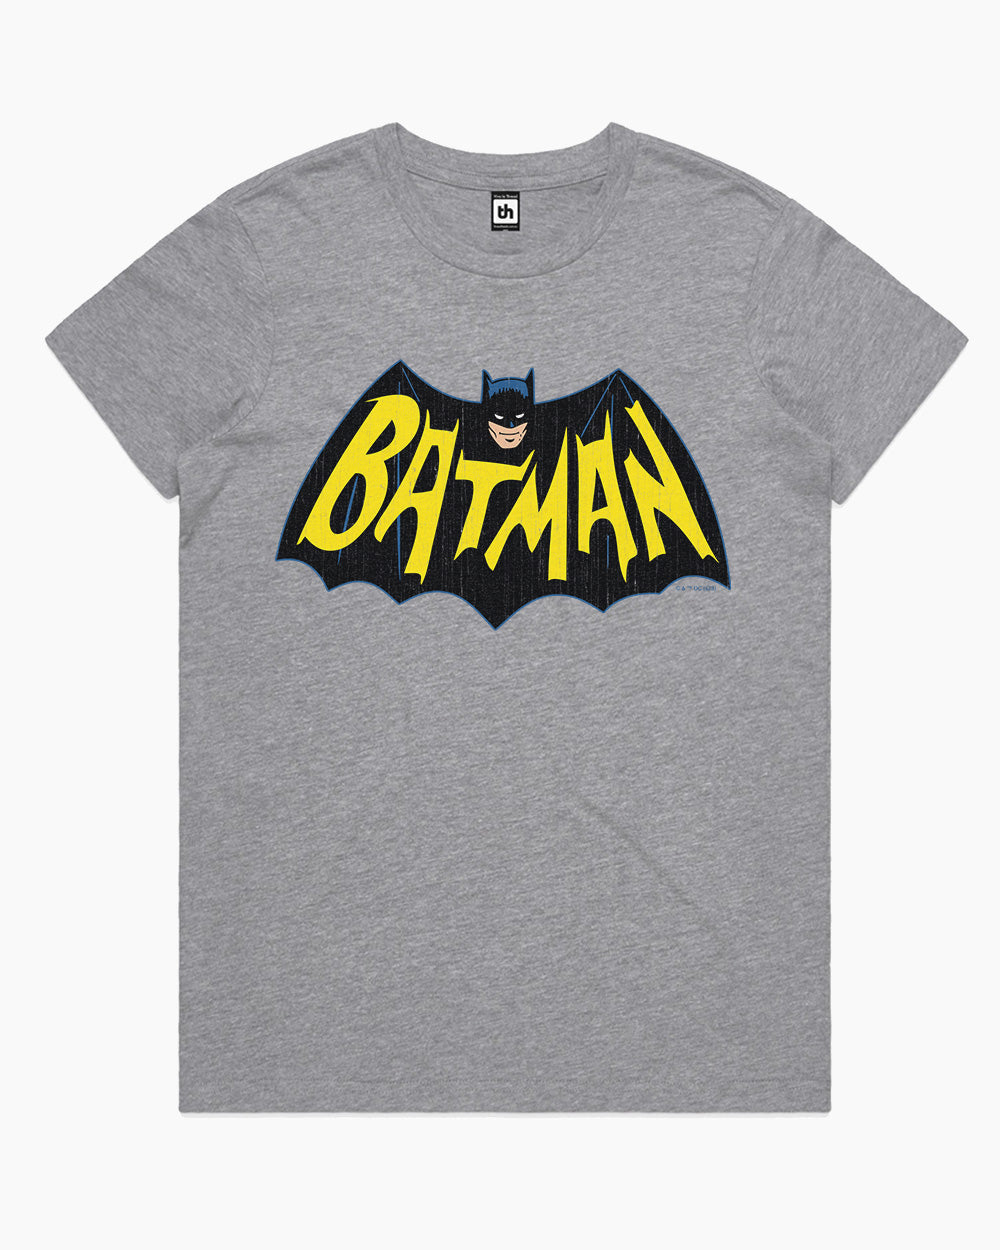 Count Chocula Batman Logo Mashup T-Shirt by Glen Evans - Pixels